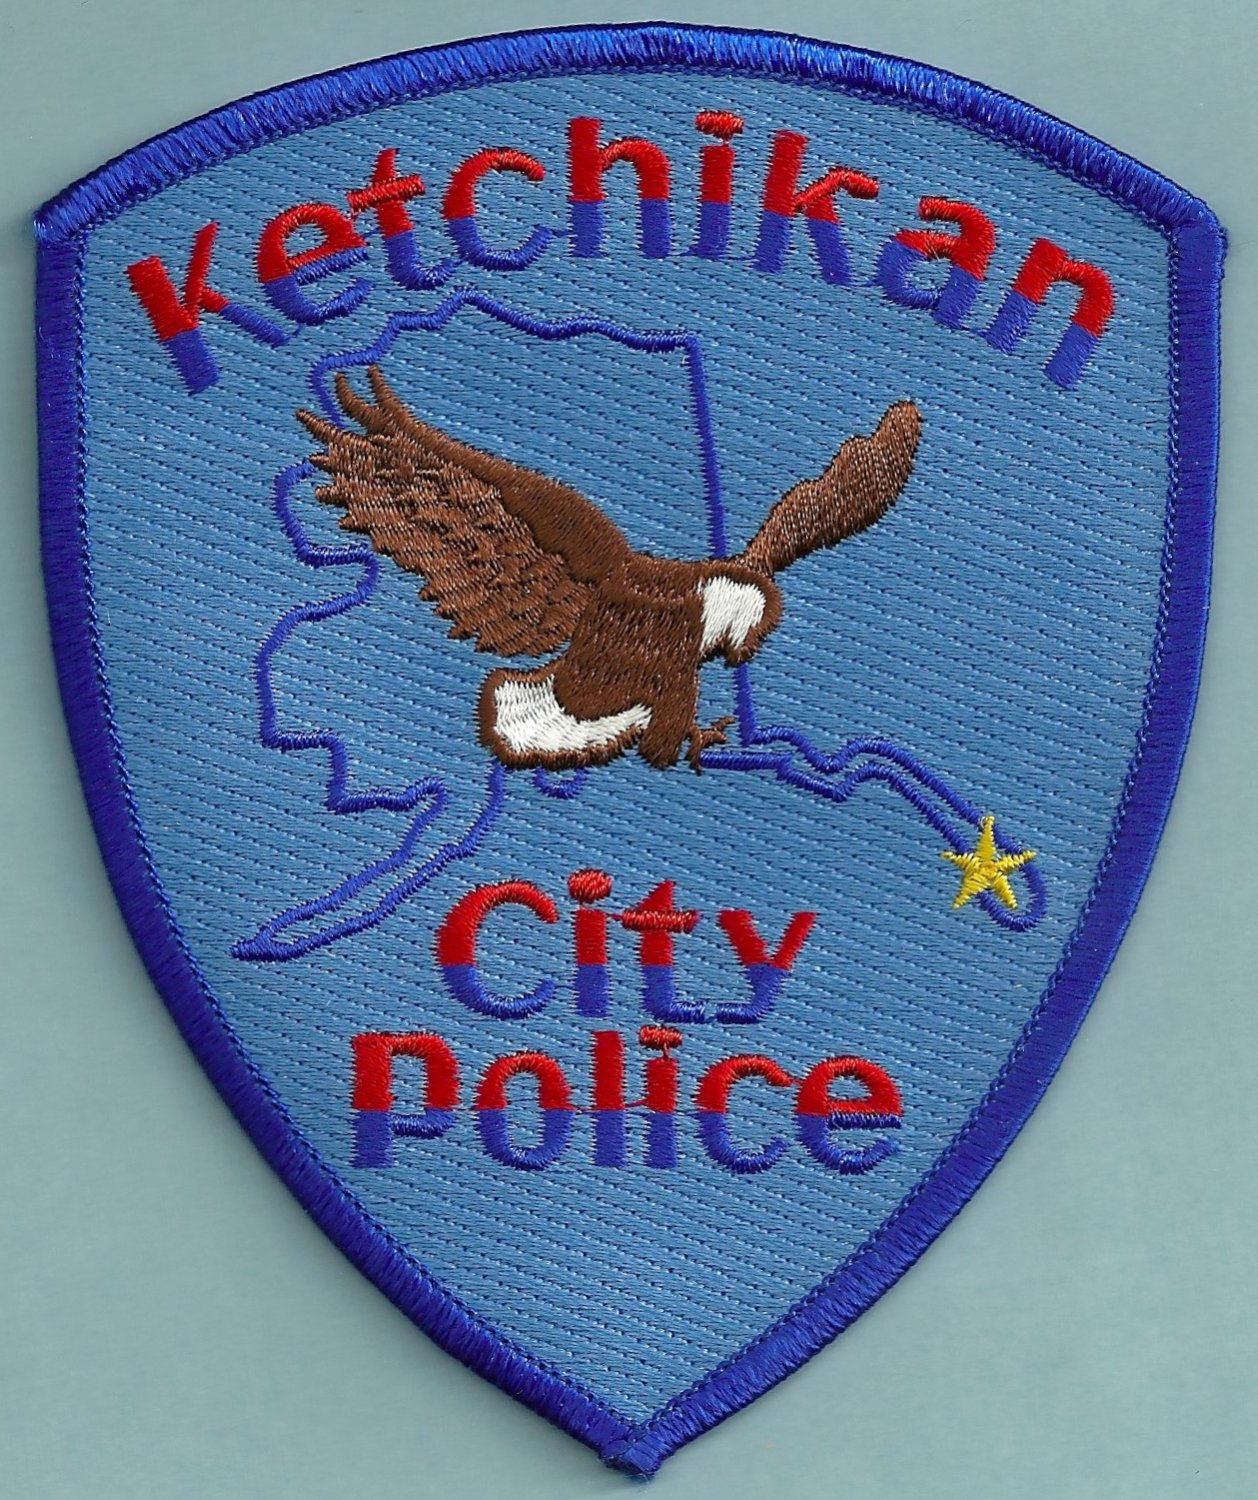 Ketchikan Alaska Police Patch